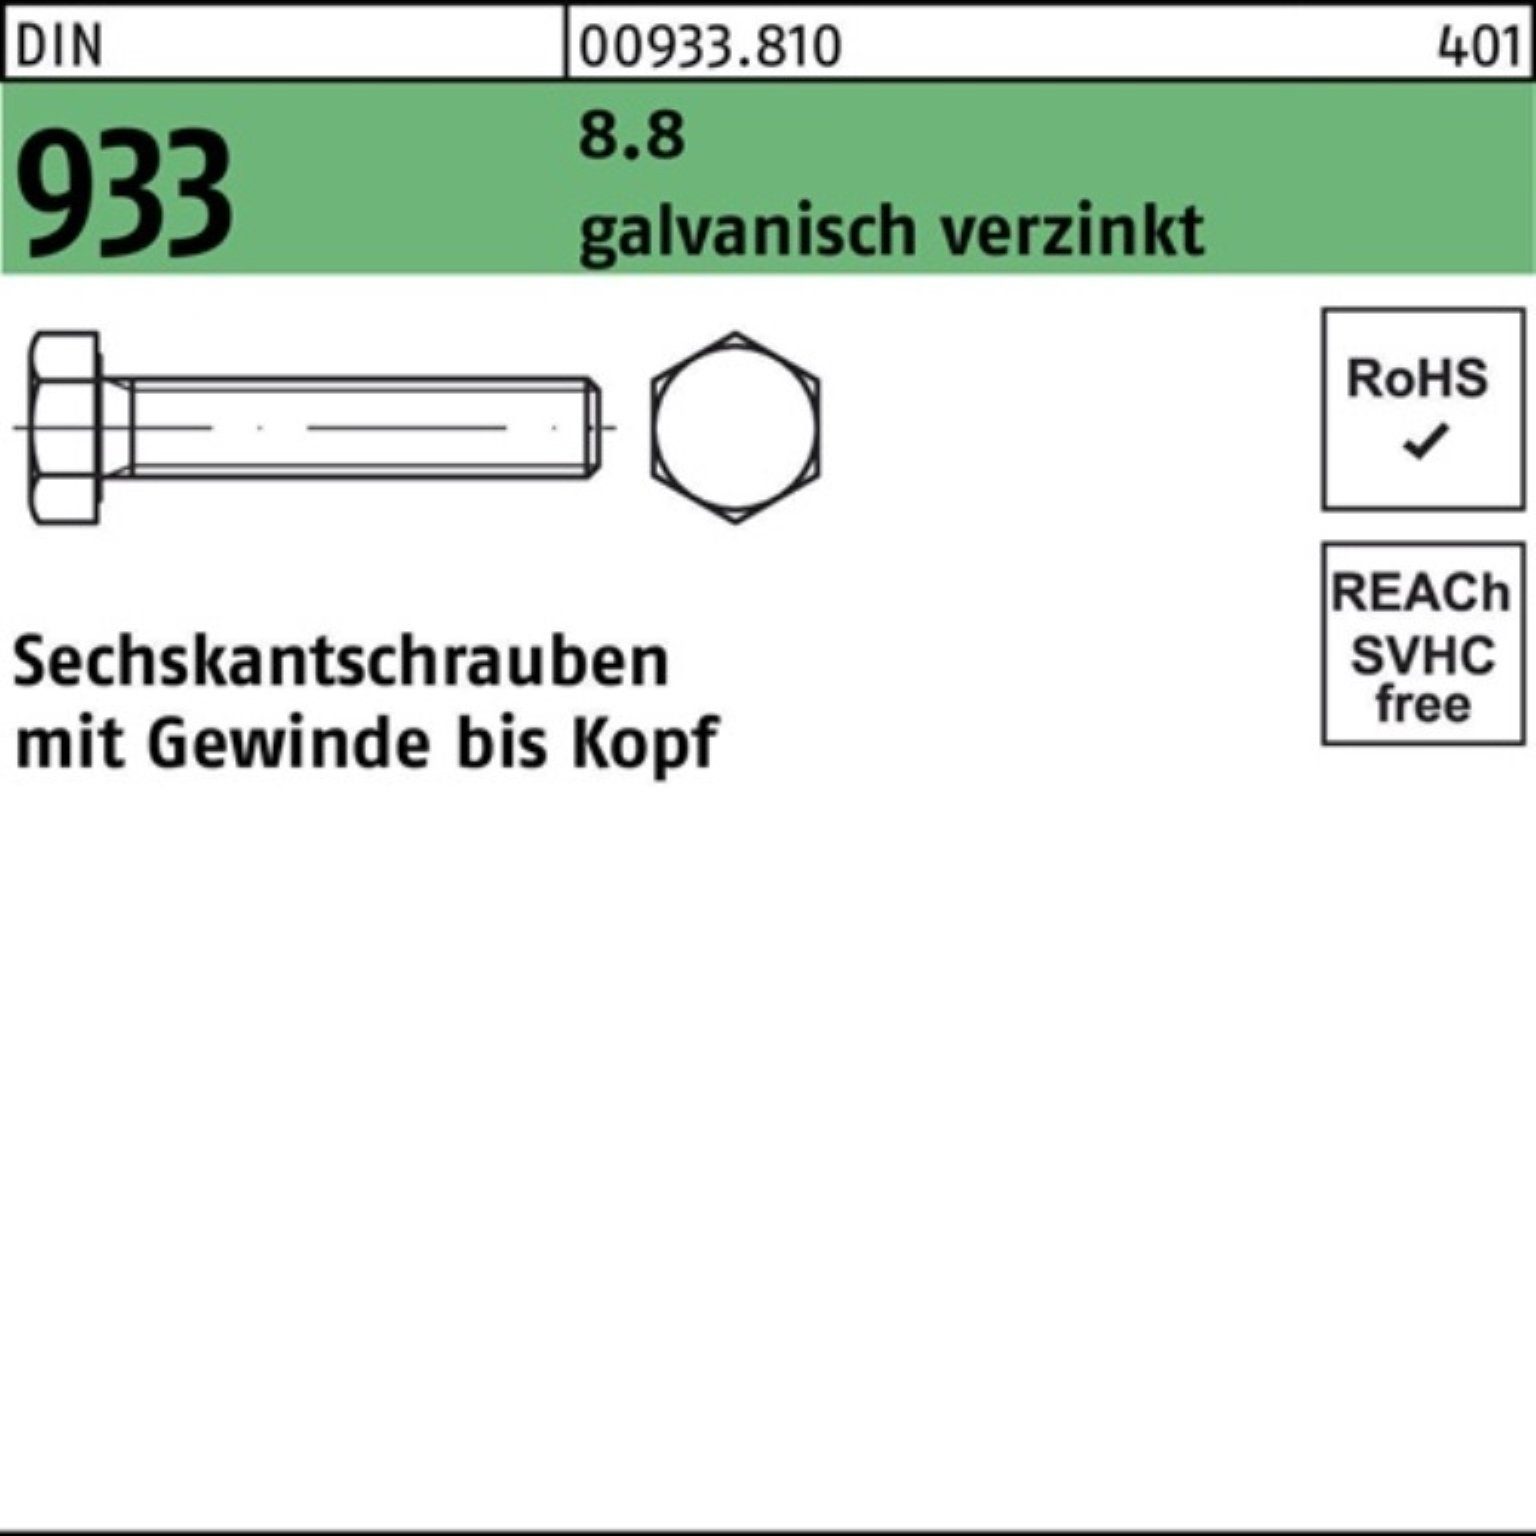 Reyher Sechskantschraube 12 St 100 100er M12x Pack Sechskantschraube VG galv.verz. 933 DIN 8.8